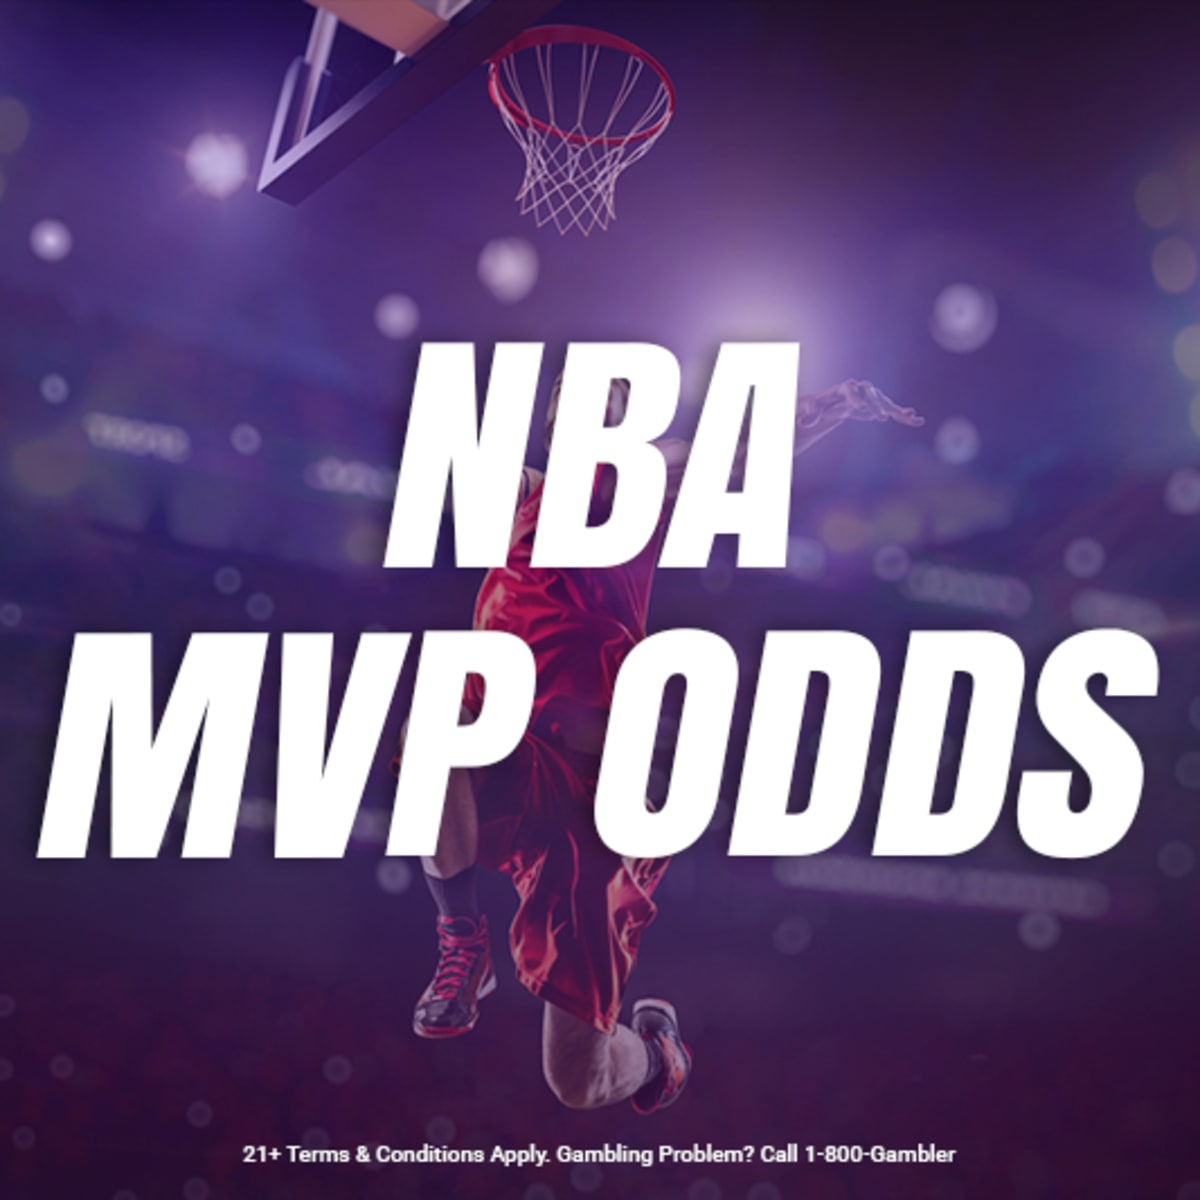 A look at some memorable NBA MVP votes - The Boston Globe